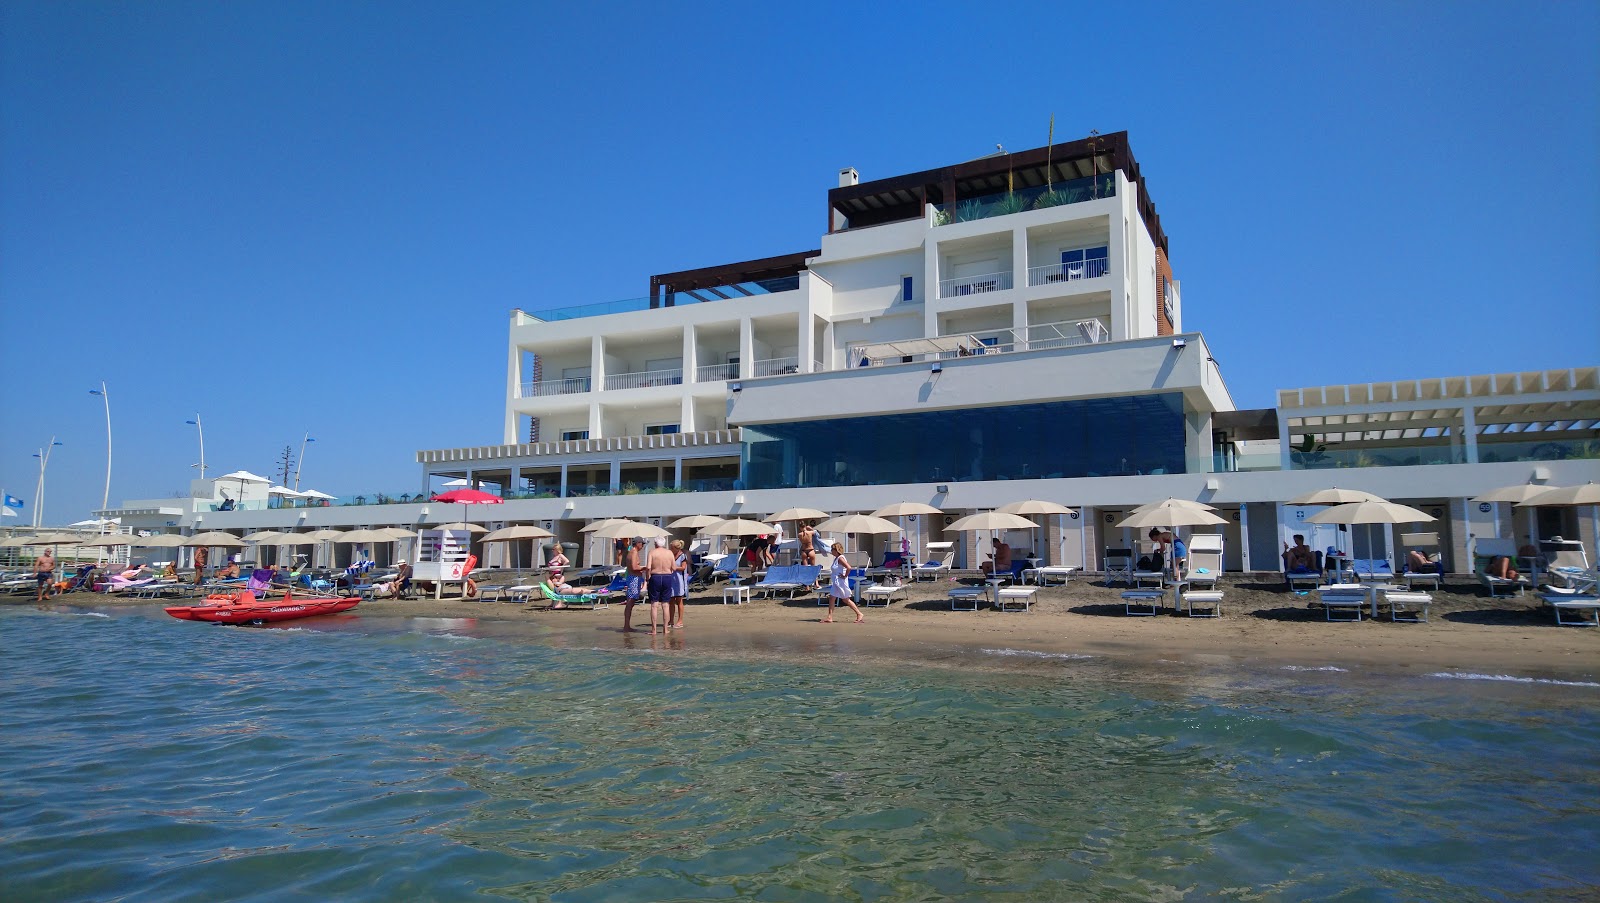 Capoportiere beach'in fotoğrafı kısmen otel alanı